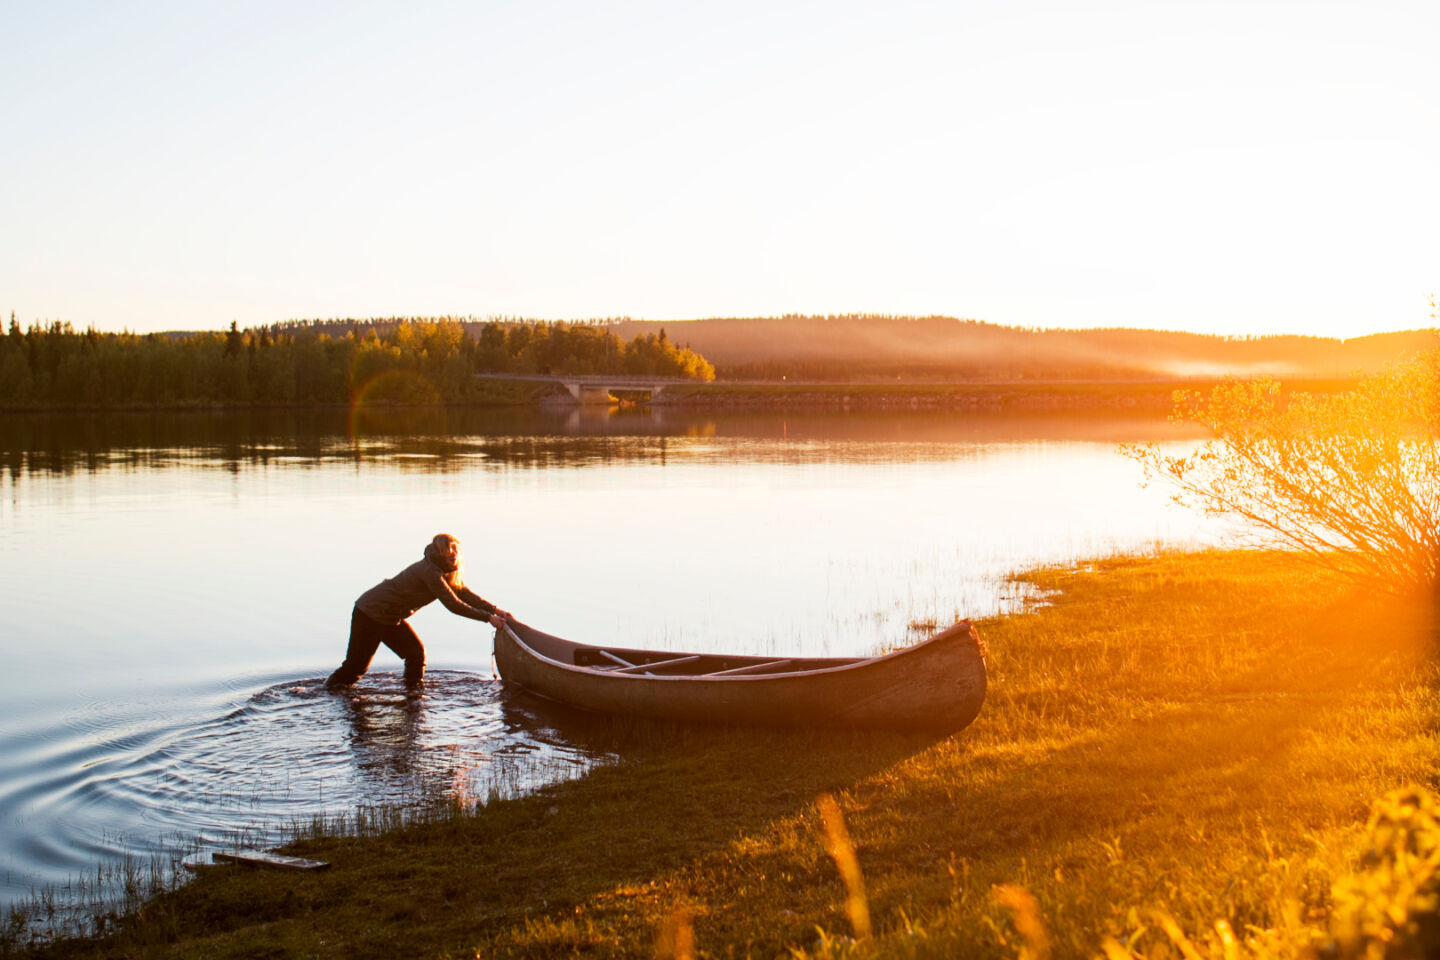 Midnight sun canoeing, a perk of seasonal work in Lapland